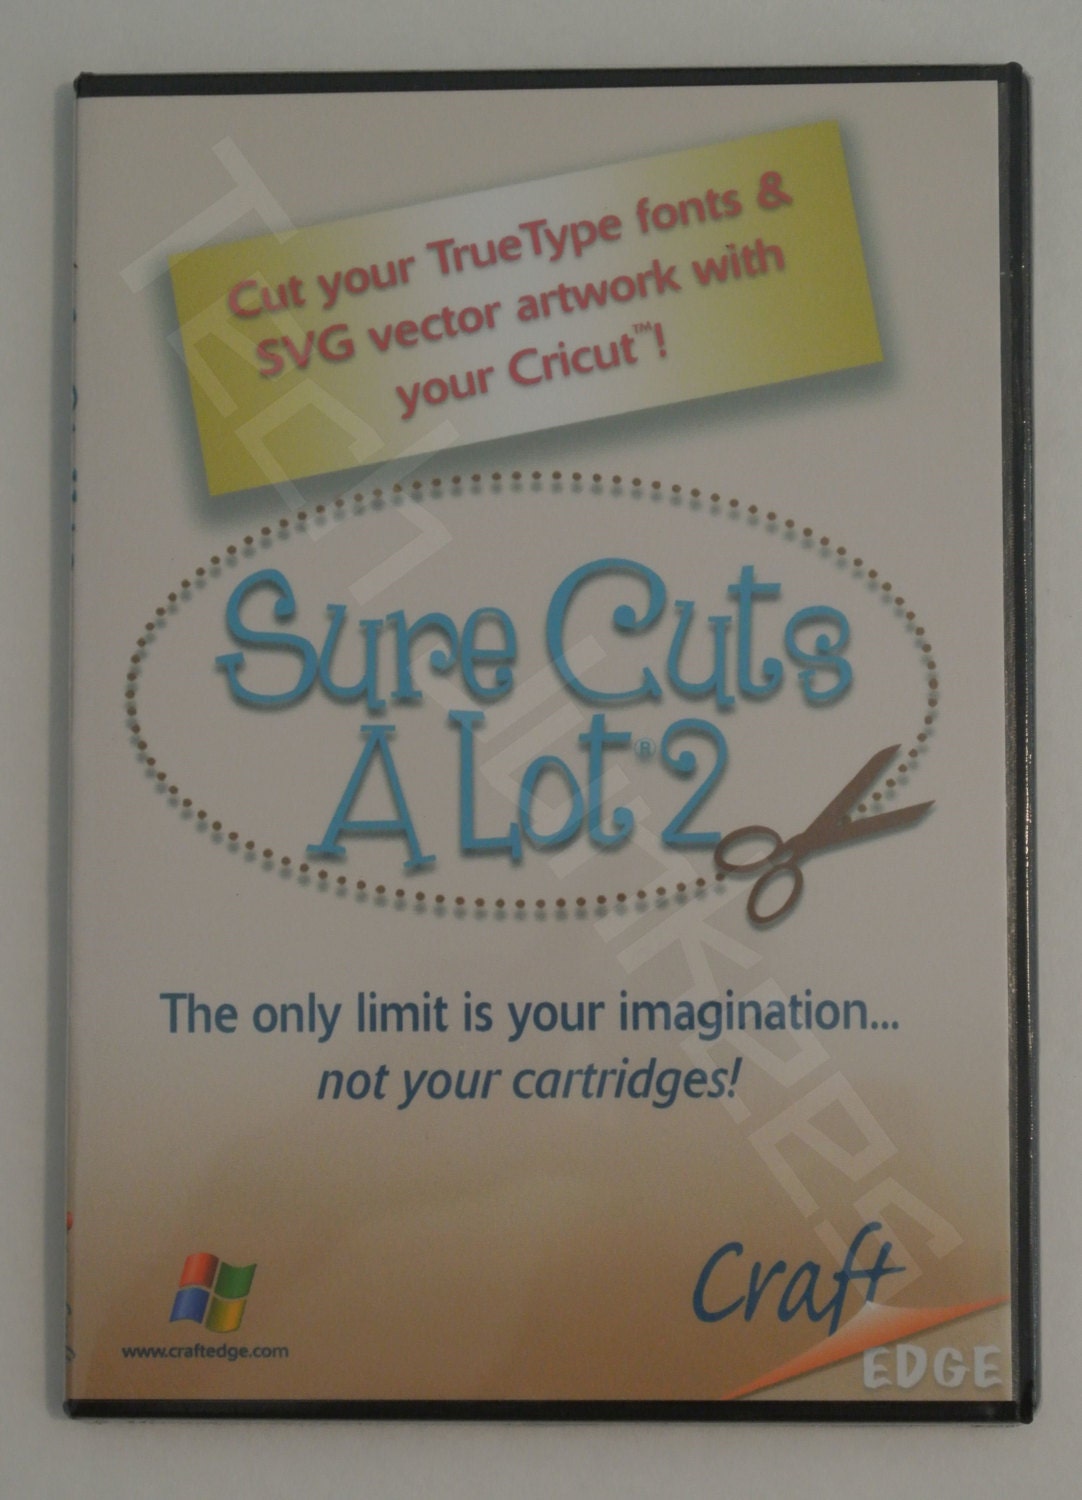 free sure cuts a lot 2 program for ccricut